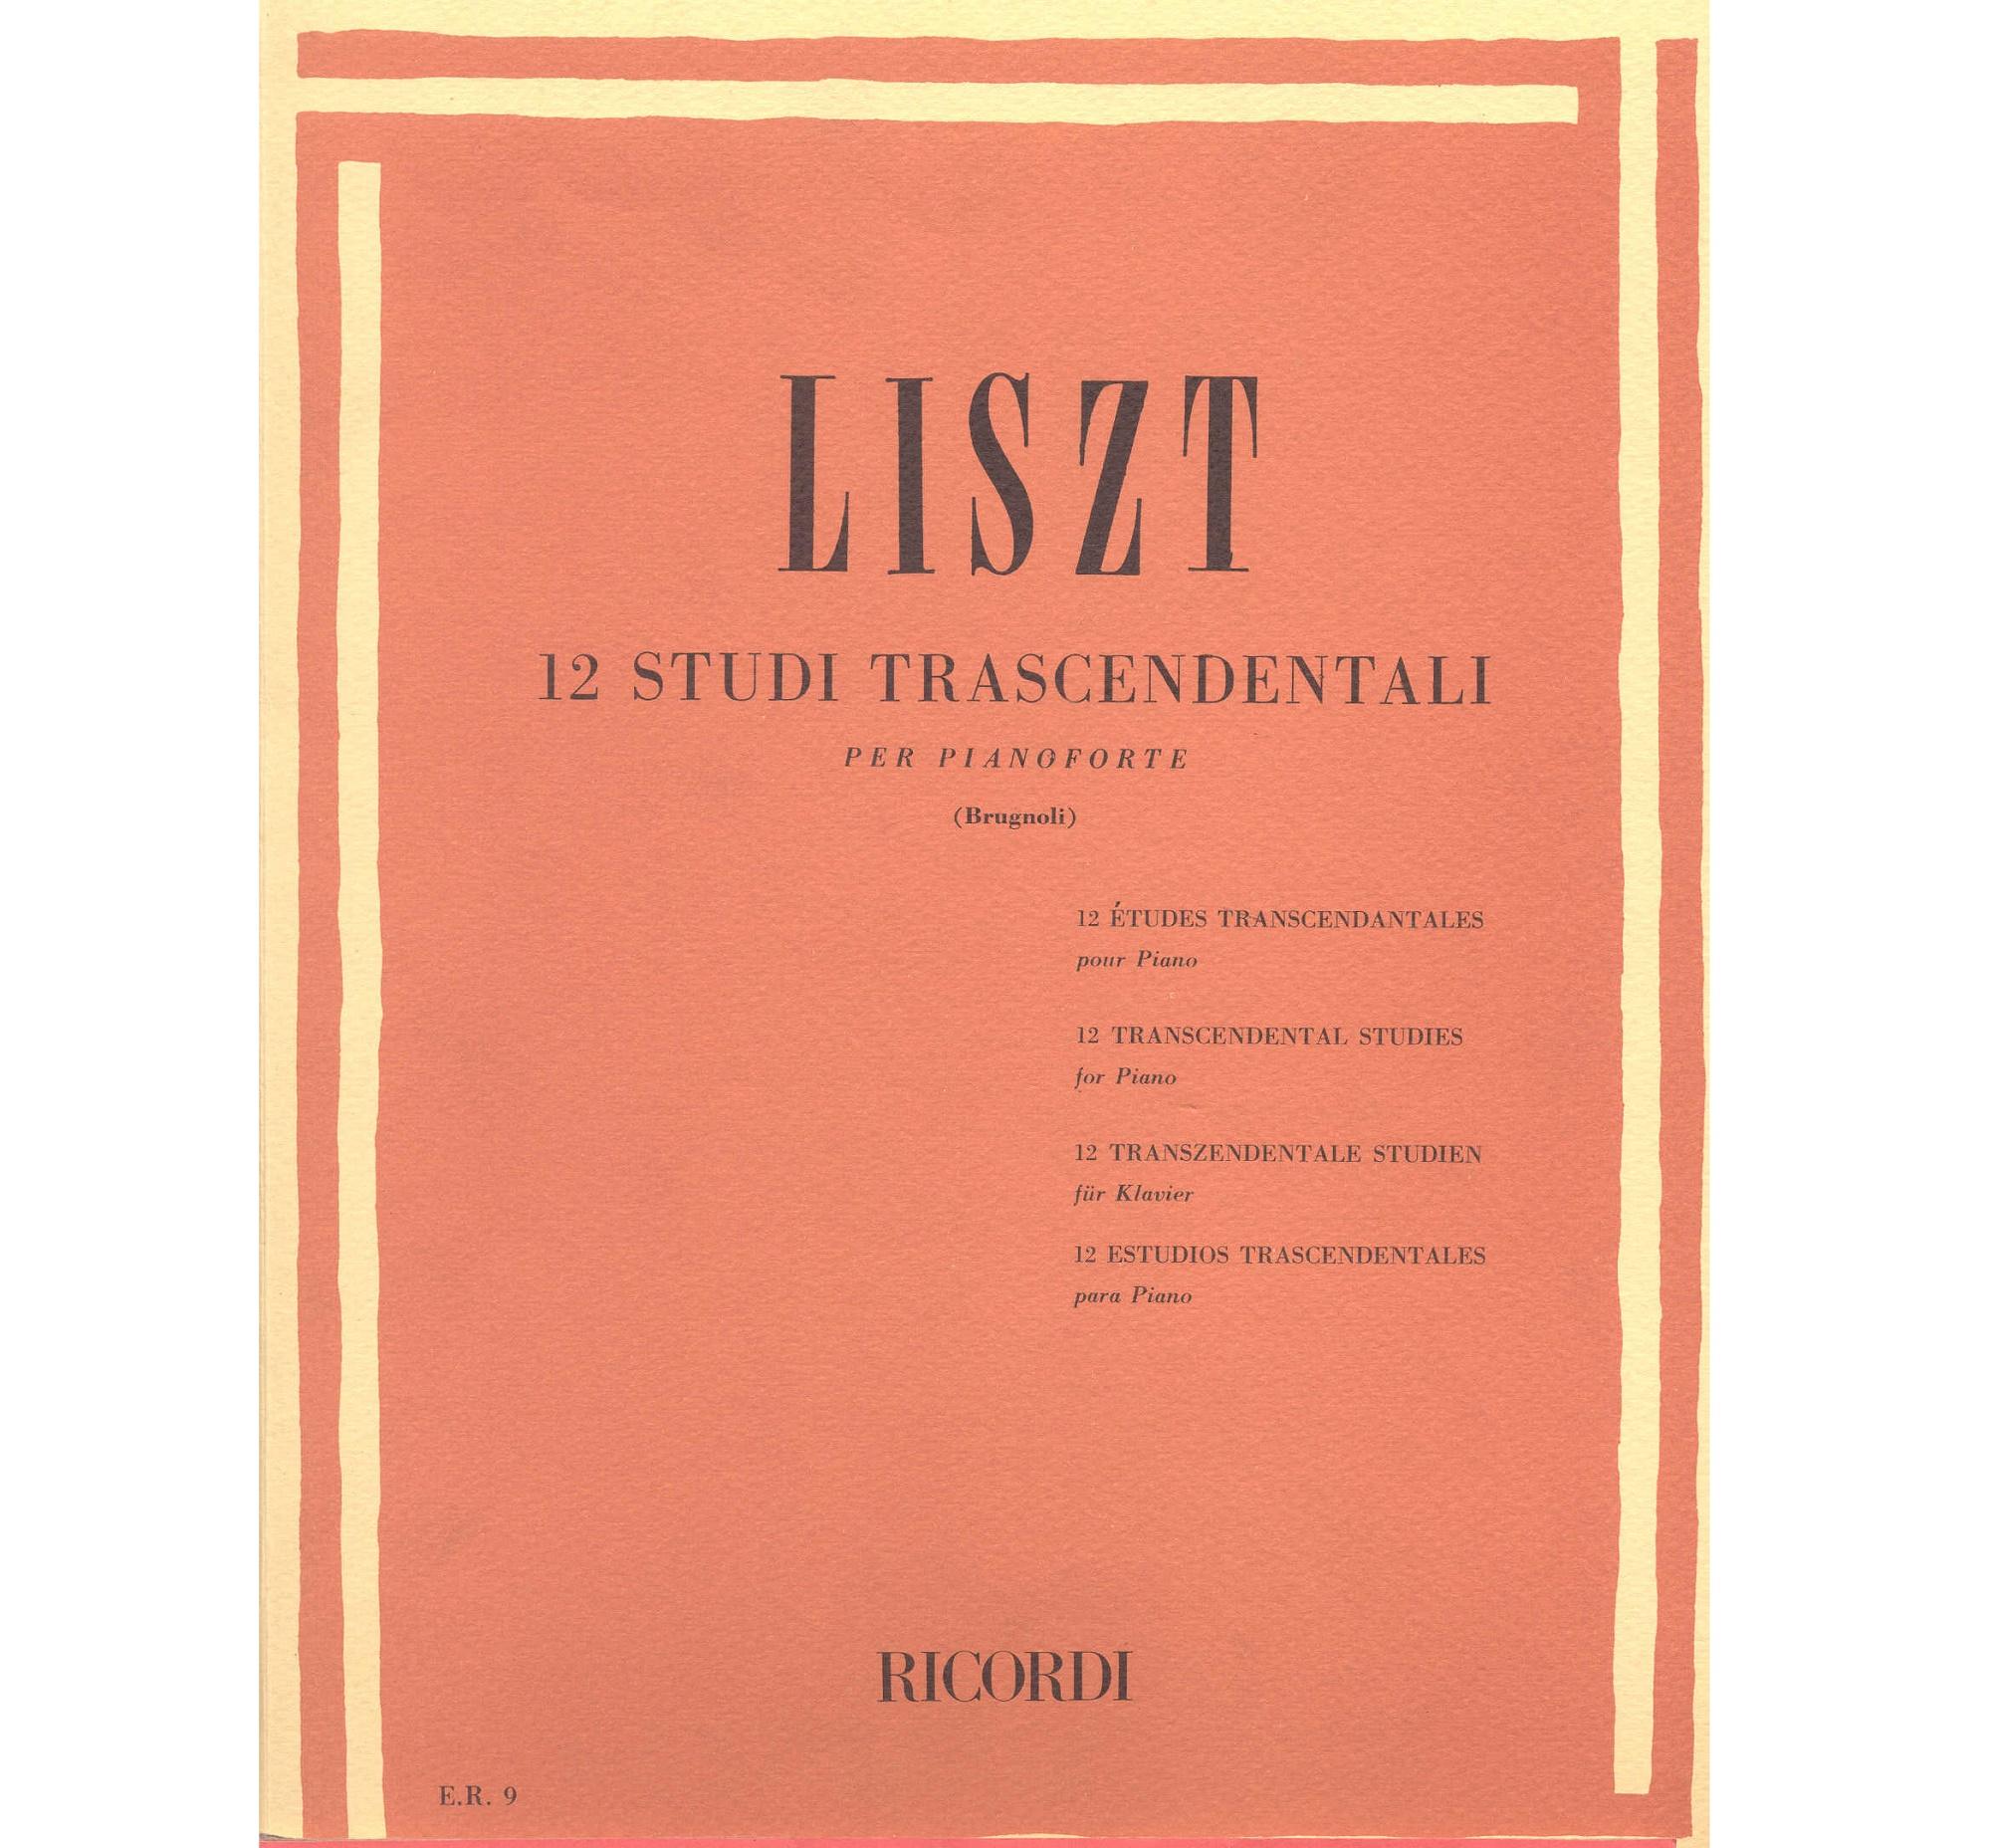 Liszt 12 studi trascendentali per pianoforte (Brugnoli) - Ricordi